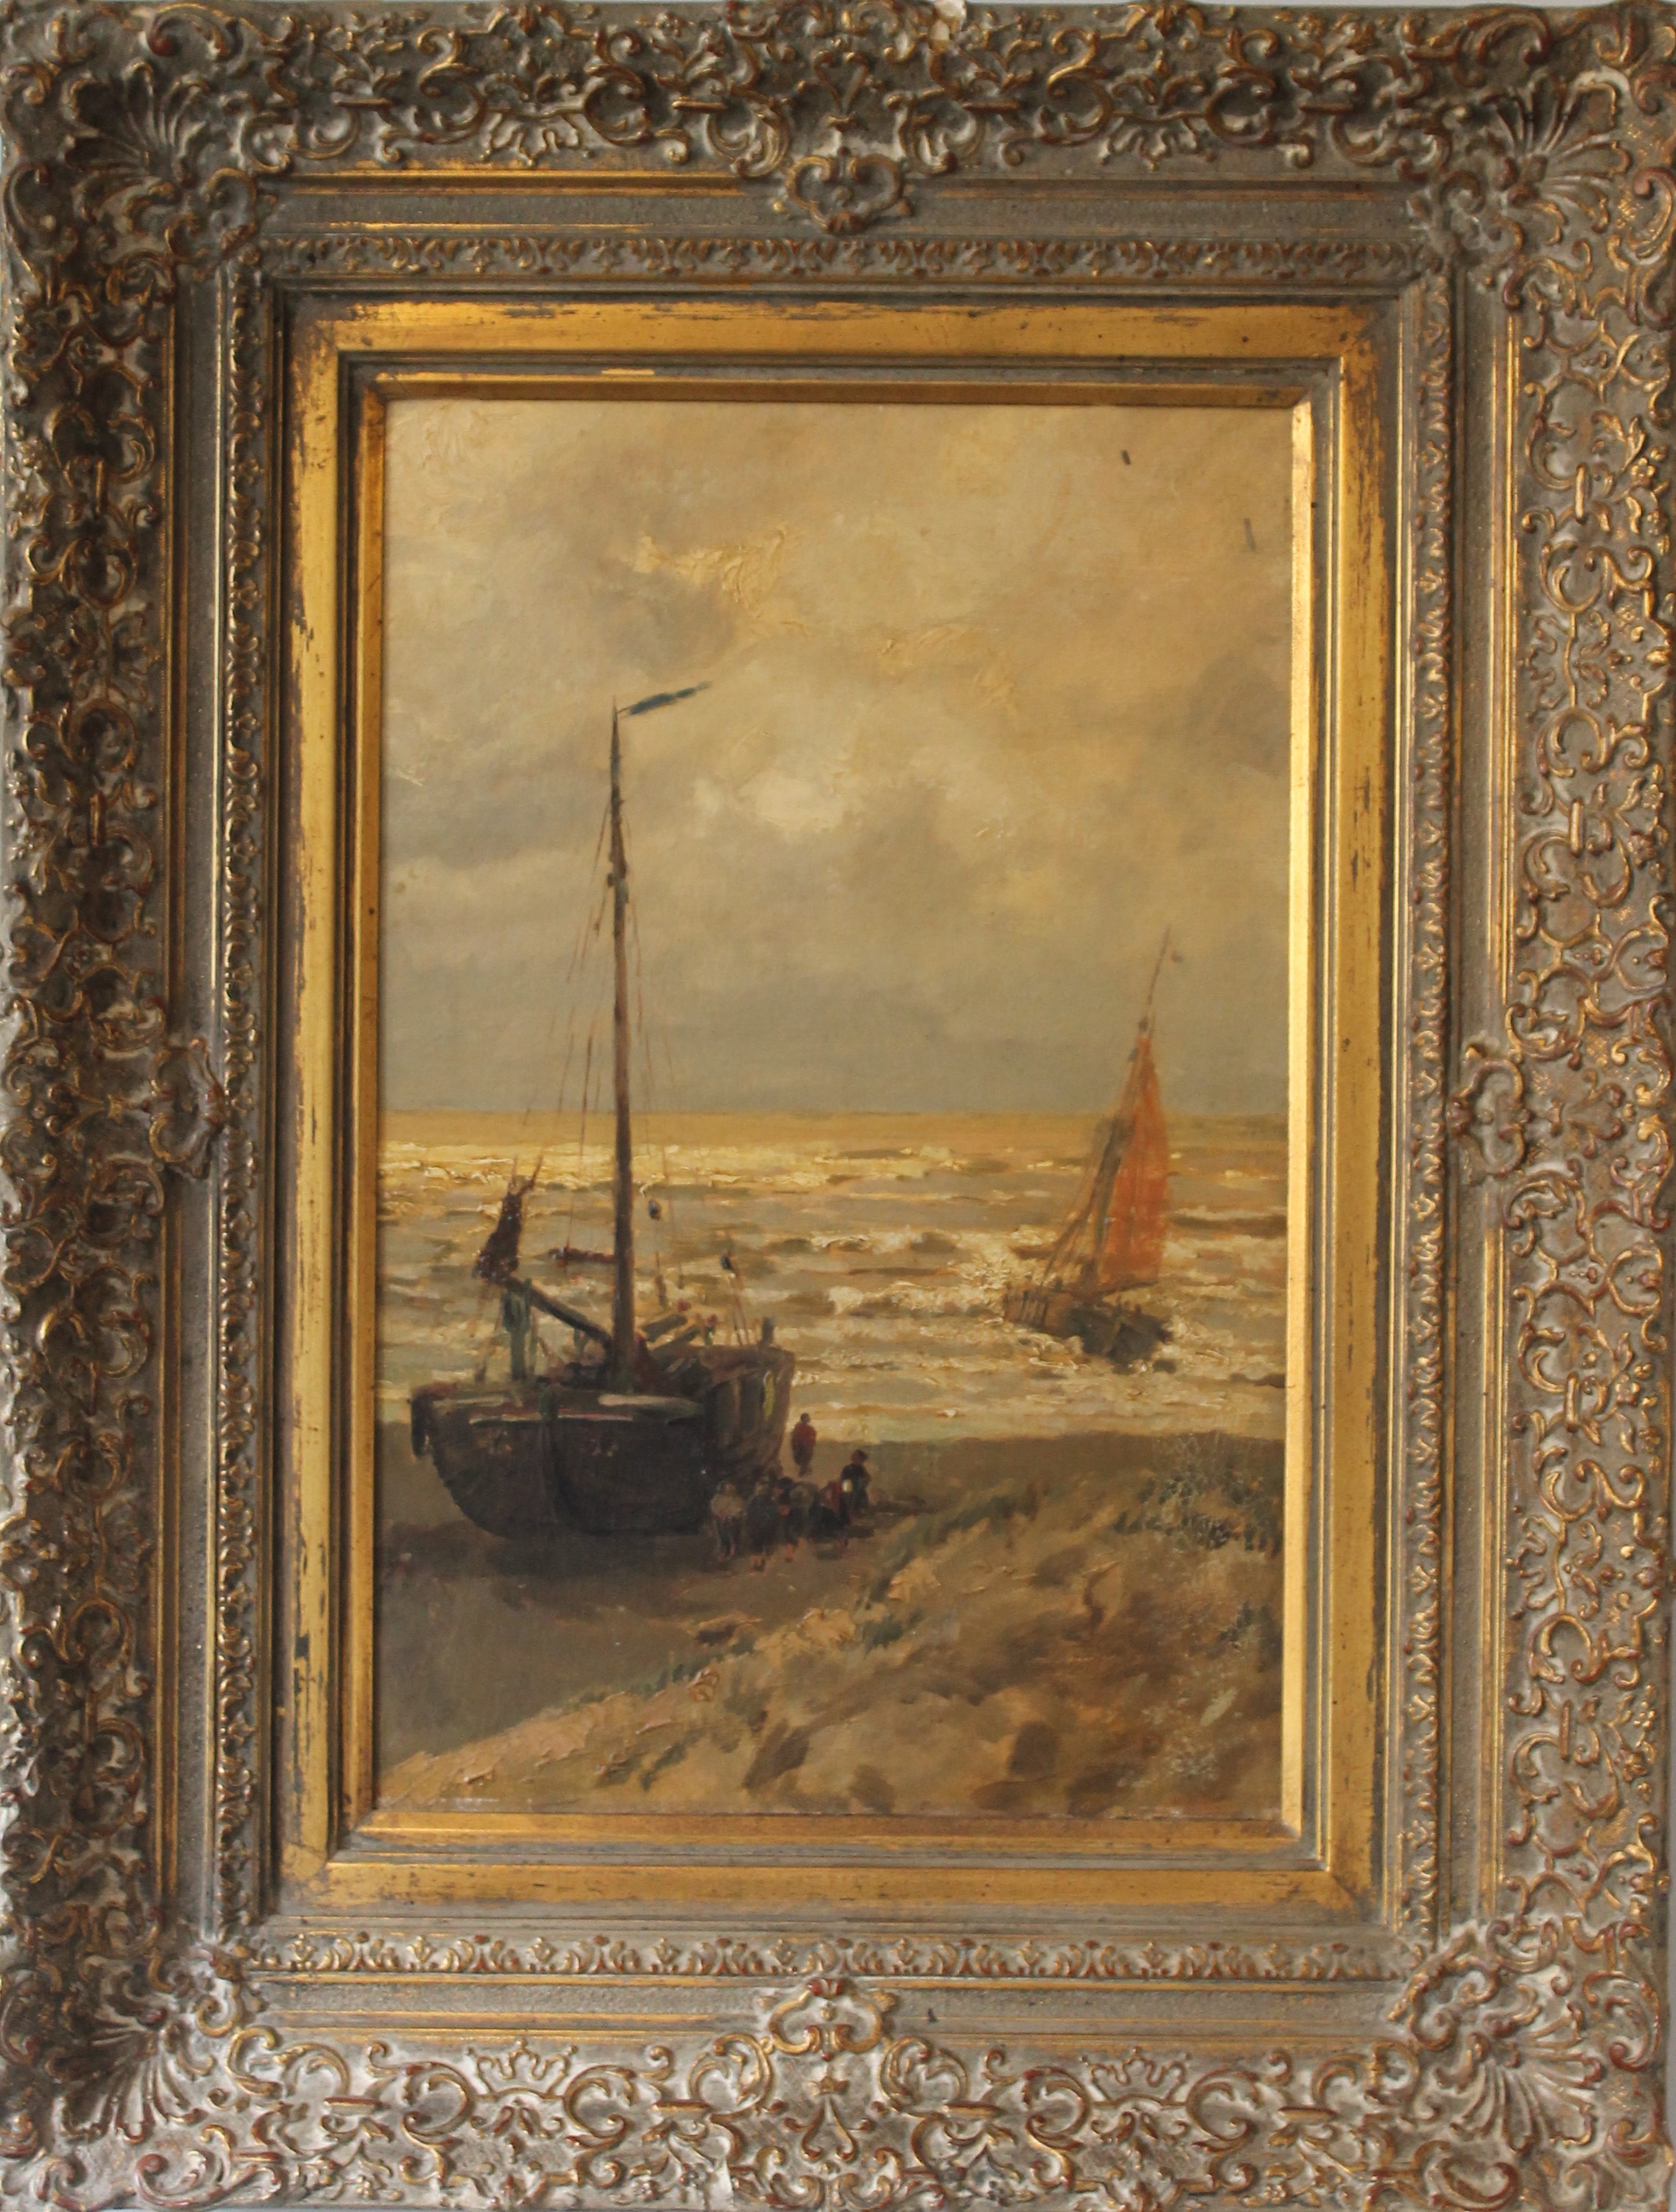 DUTCH SCHOOL, Fishing Boats on a Beach, oil on canvas. 28.5 x 44.5 cm. - Image 2 of 2